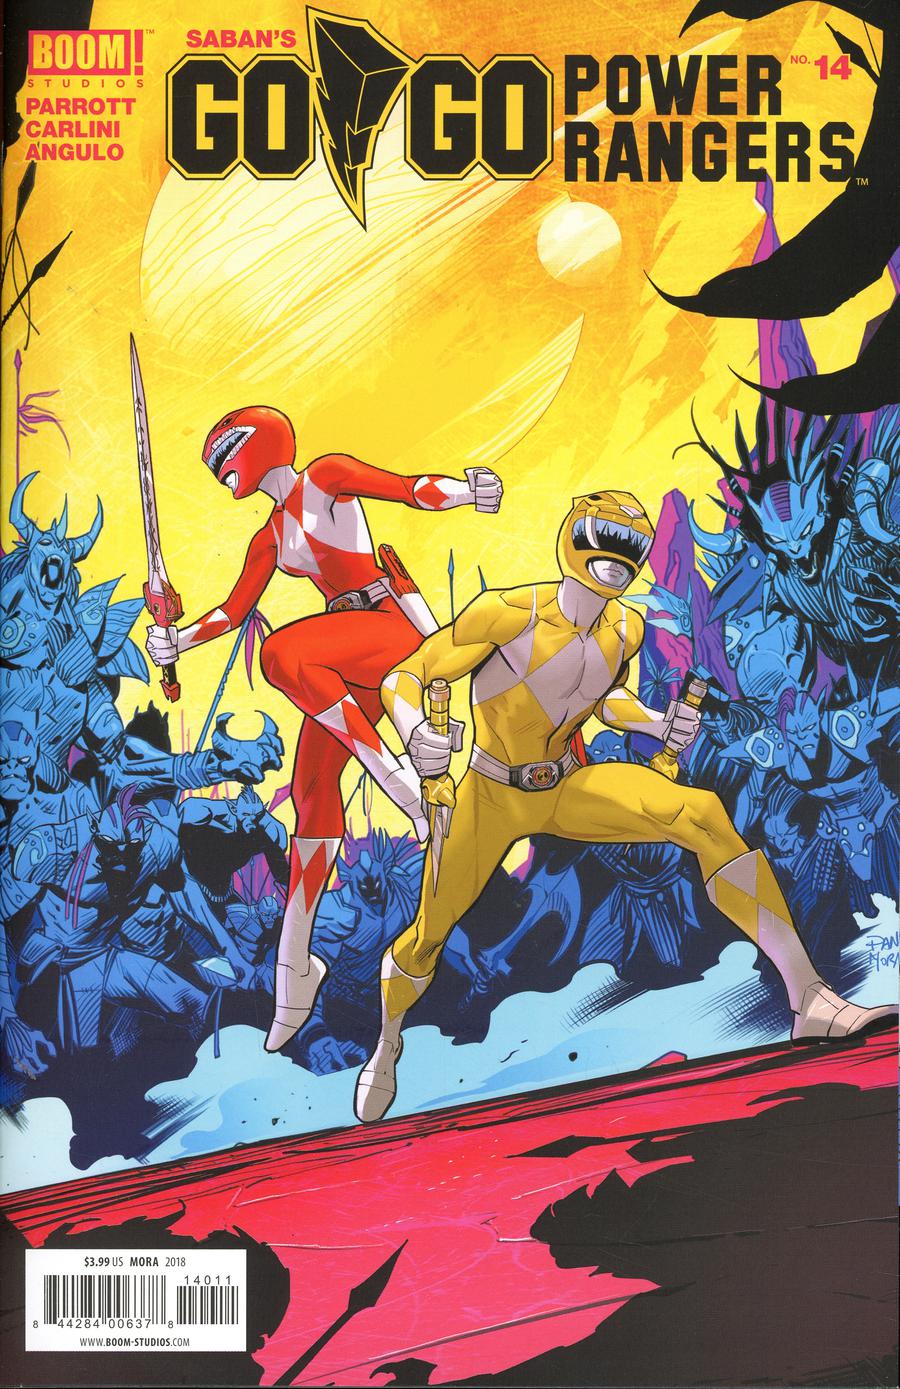 Sabans Go Go Power Rangers #14 Cover A Regular Dan Mora Cover (Shattered Grid Tie-In)